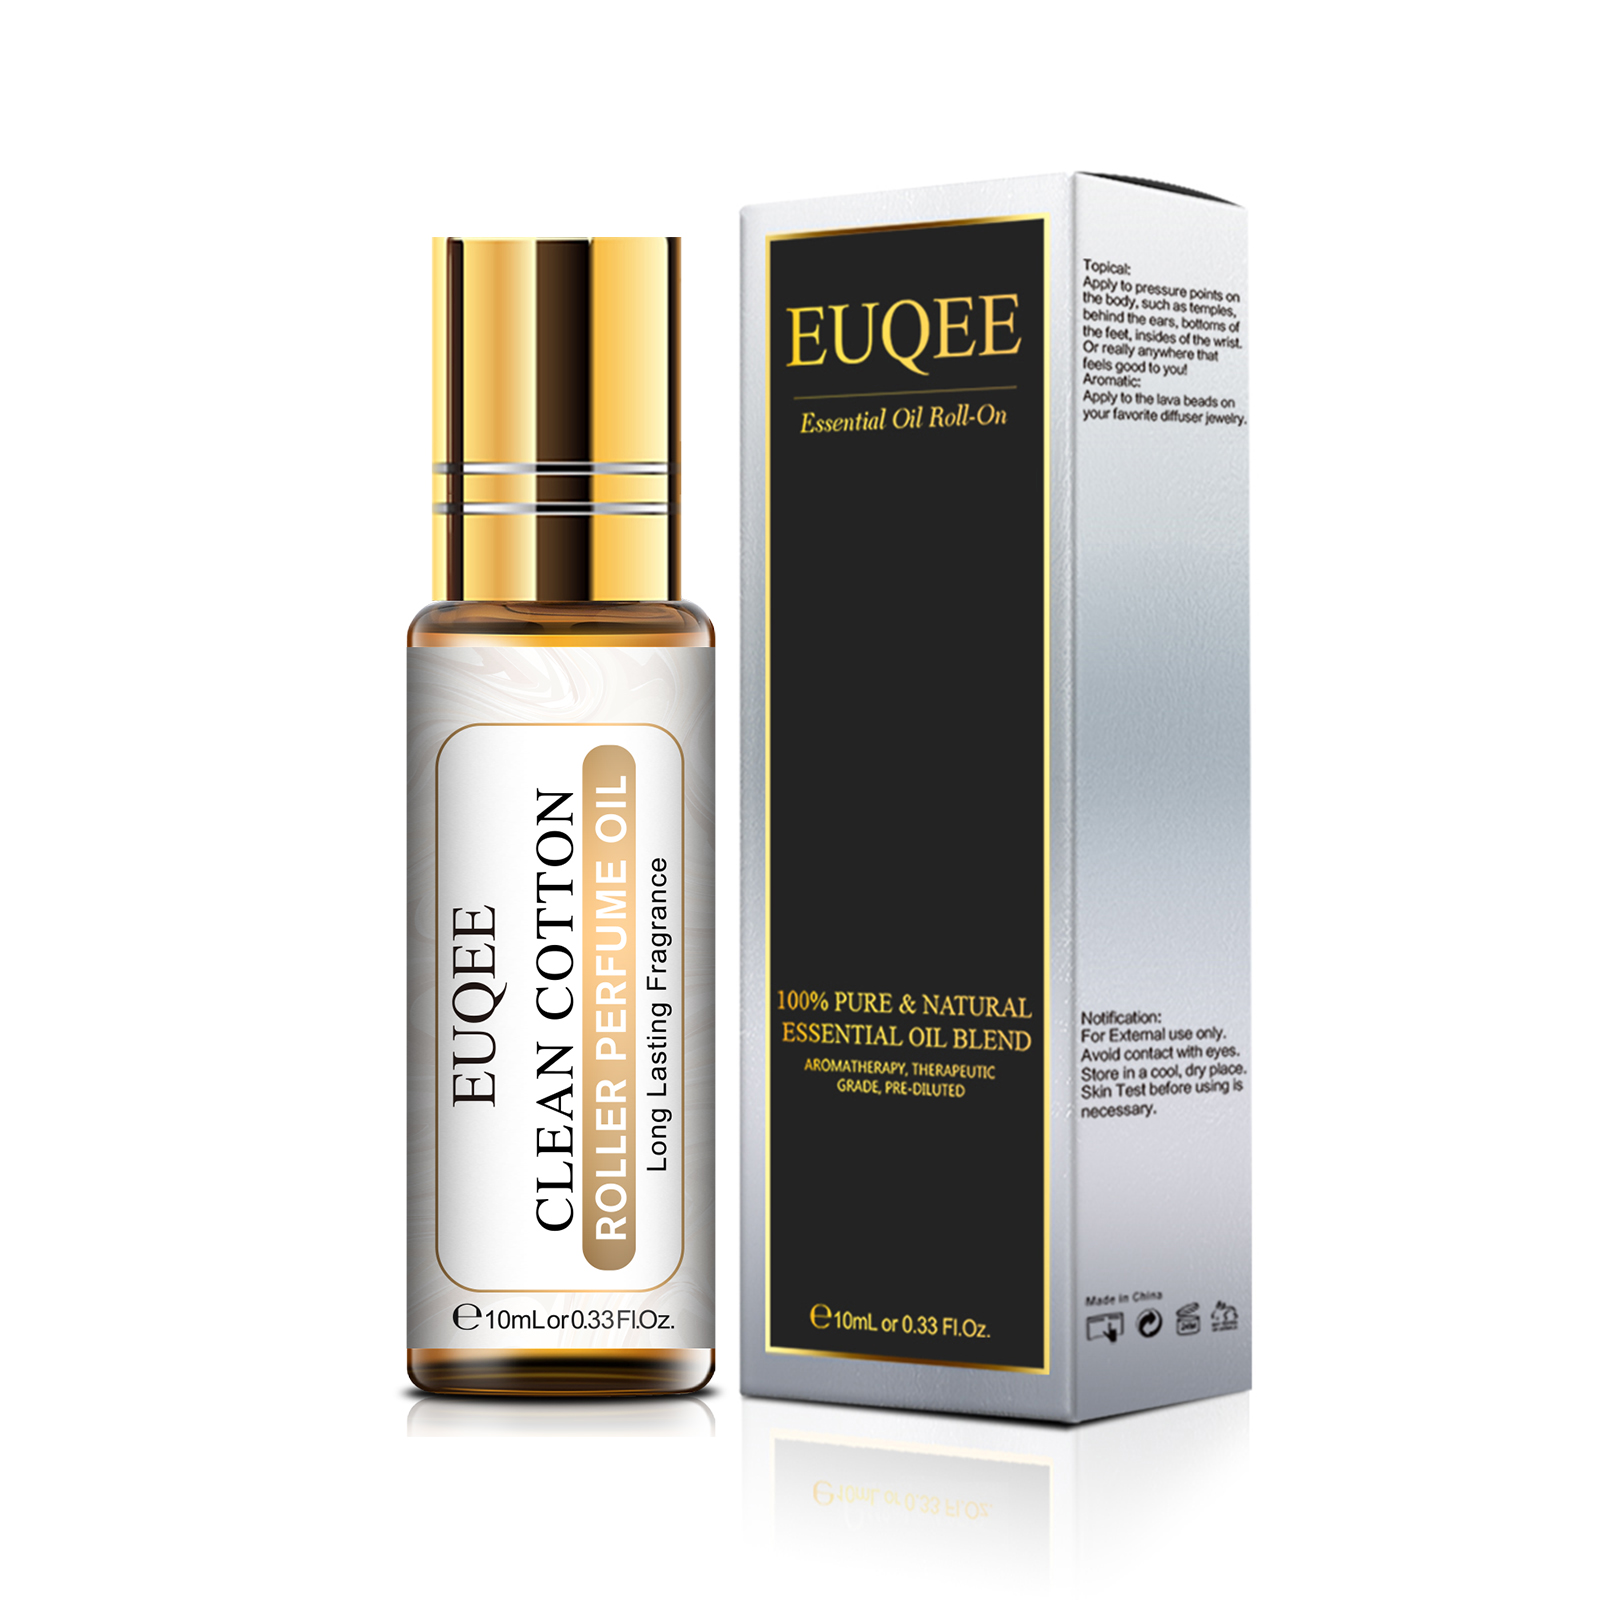 EUQEE Clean Cotton Roll-on Perfume Oil, Therapeutic Grade, Pure and Natural  for Aromatherapy, Diffuser, Soap Making, Spa Massage, Skin Care  (10ml/0.33fl.oz) 